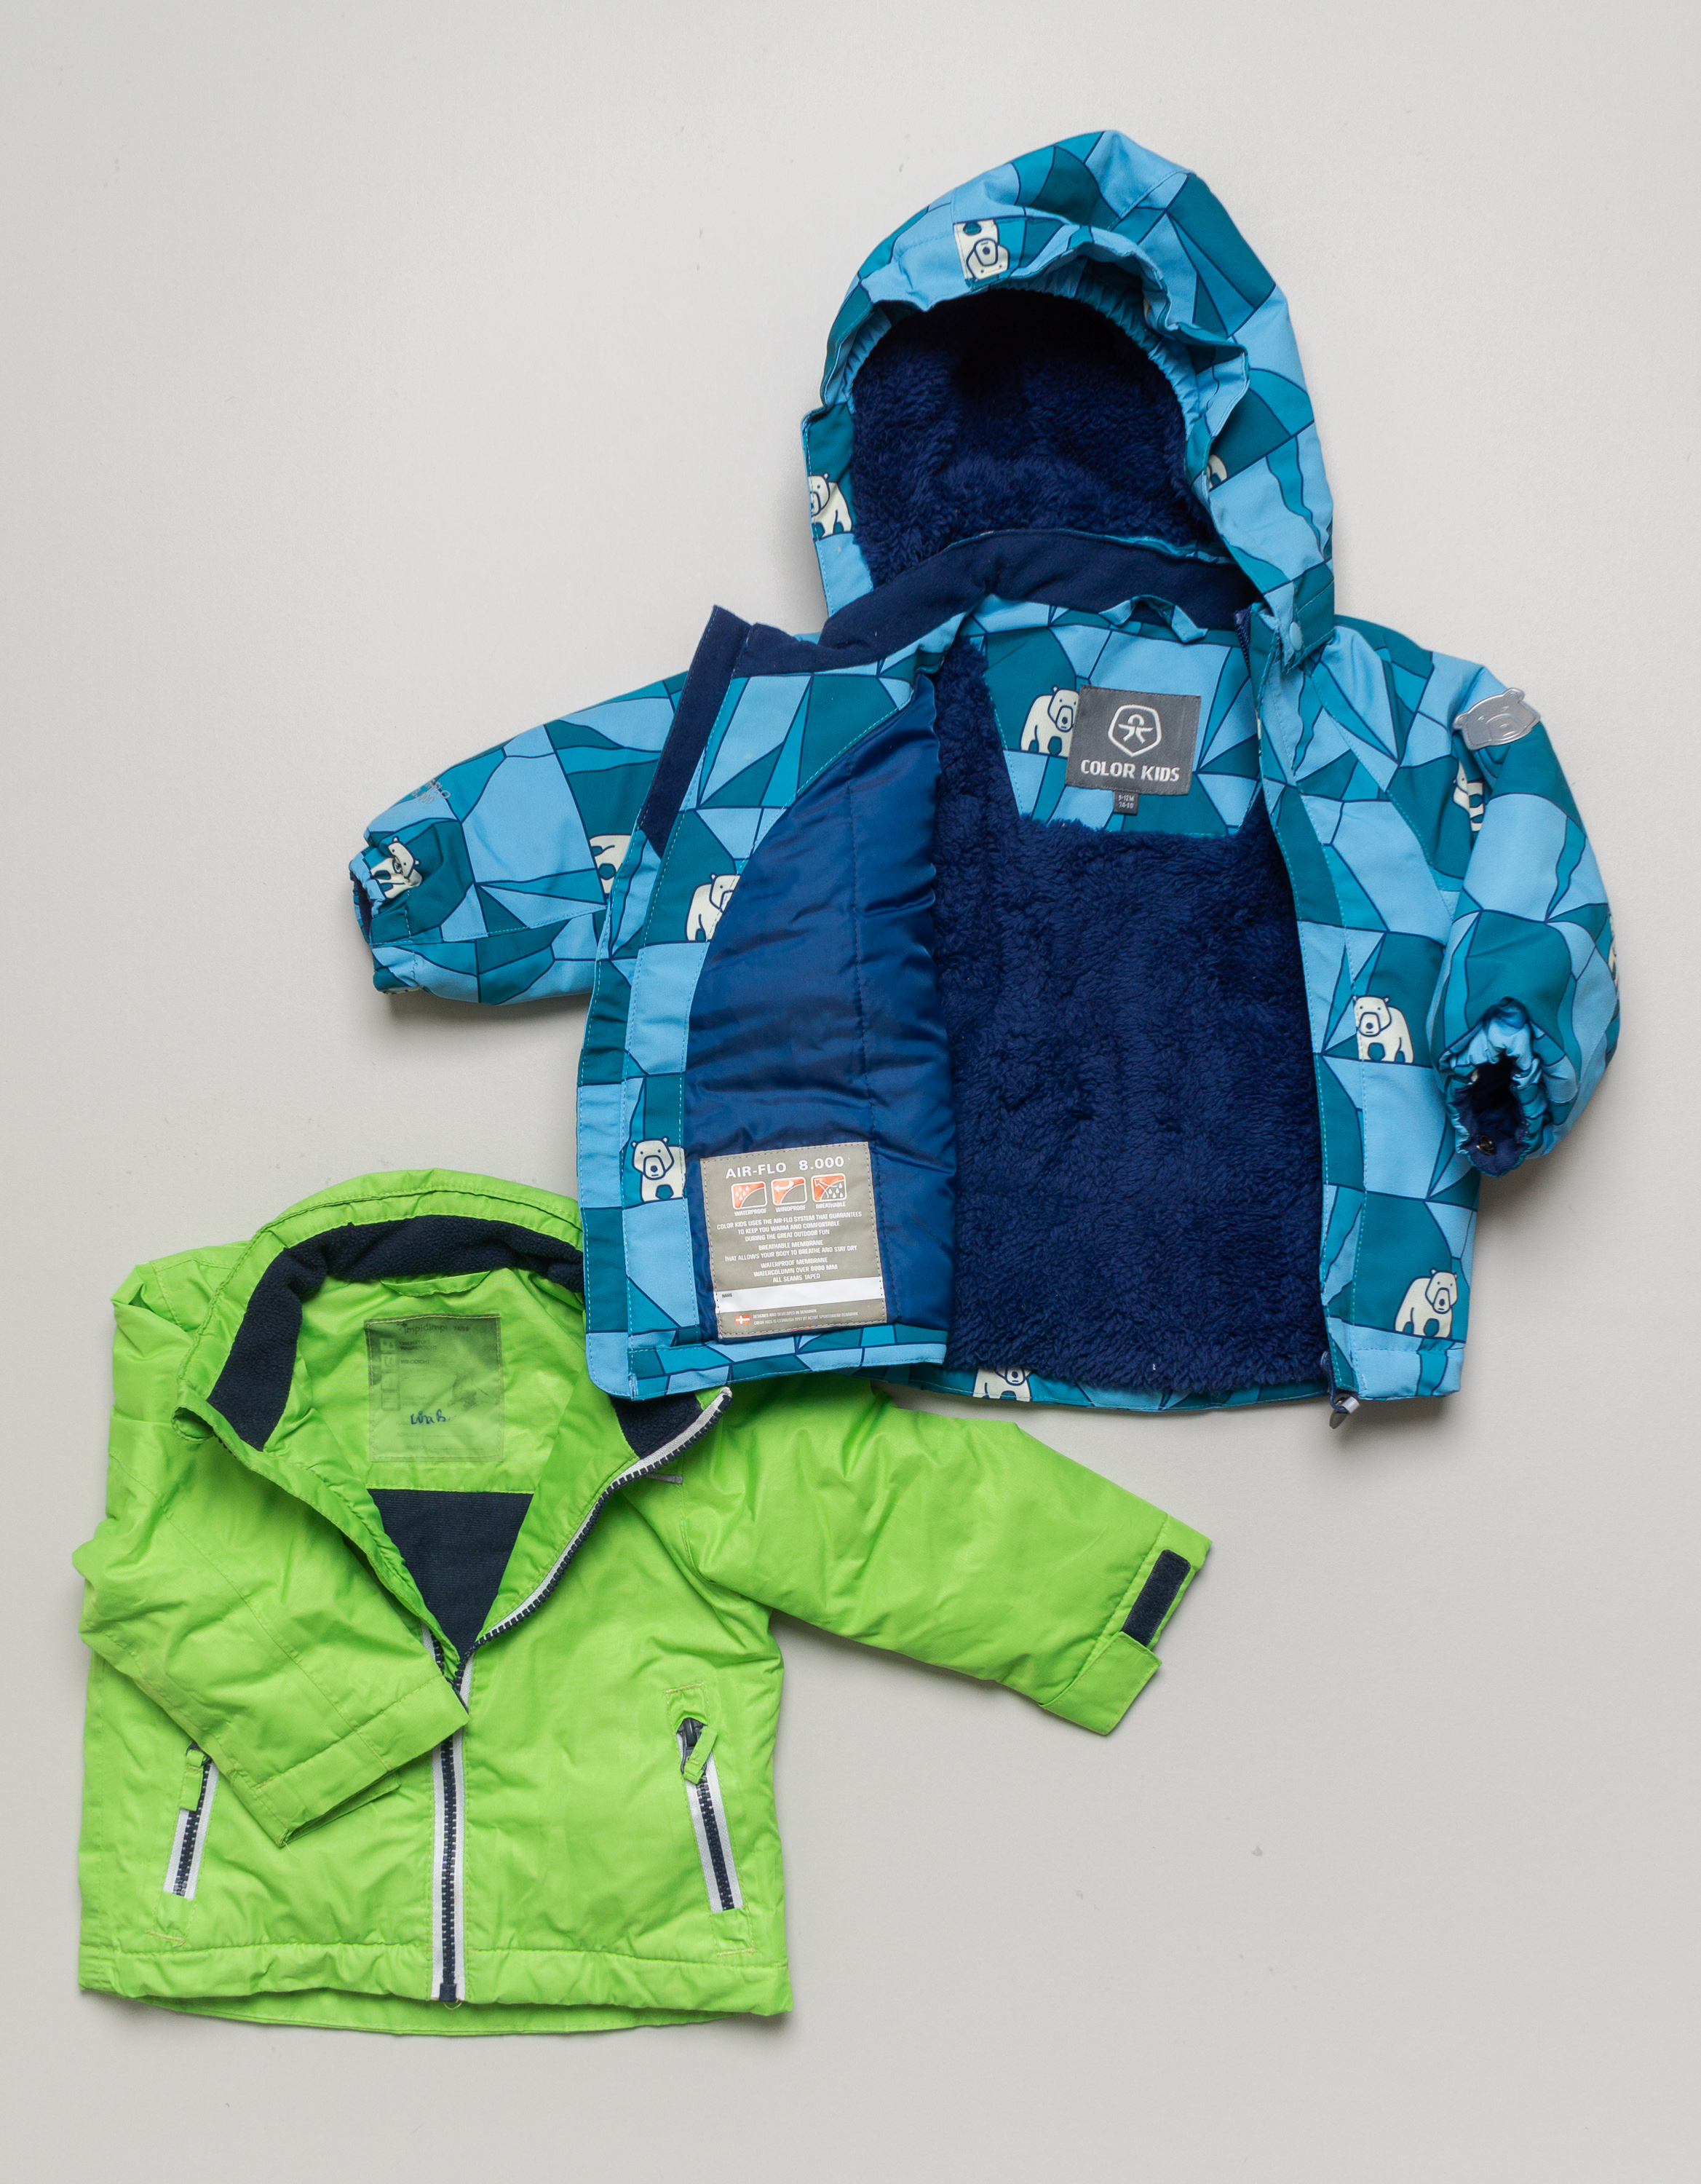 1 Winterjacke Gr. 74/80 – Color Kids Eisbär grün blau Geometrie gemustert Tasche seitlicher Reißverschluss gefüttert Fell